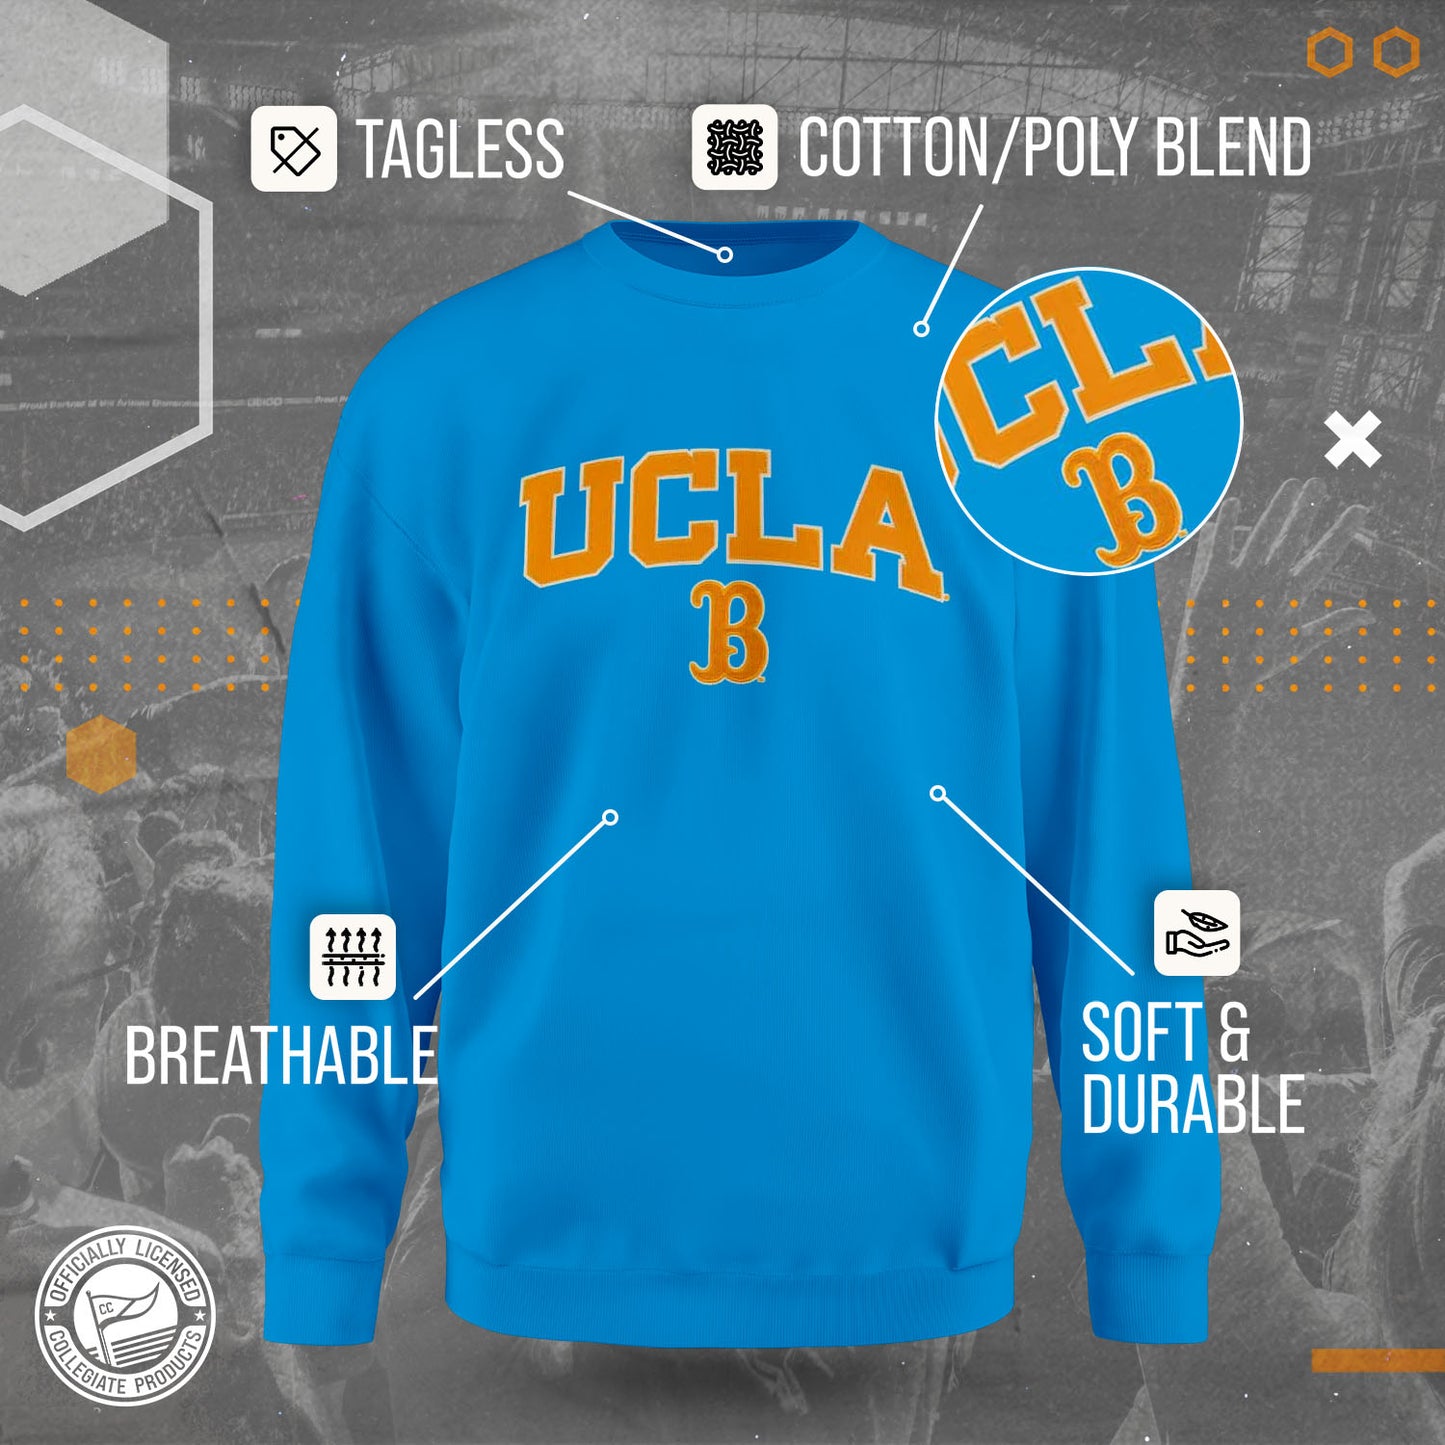 UCLA Bruins NCAA Adult Tackle Twill Crewneck Sweatshirt - Light Blue